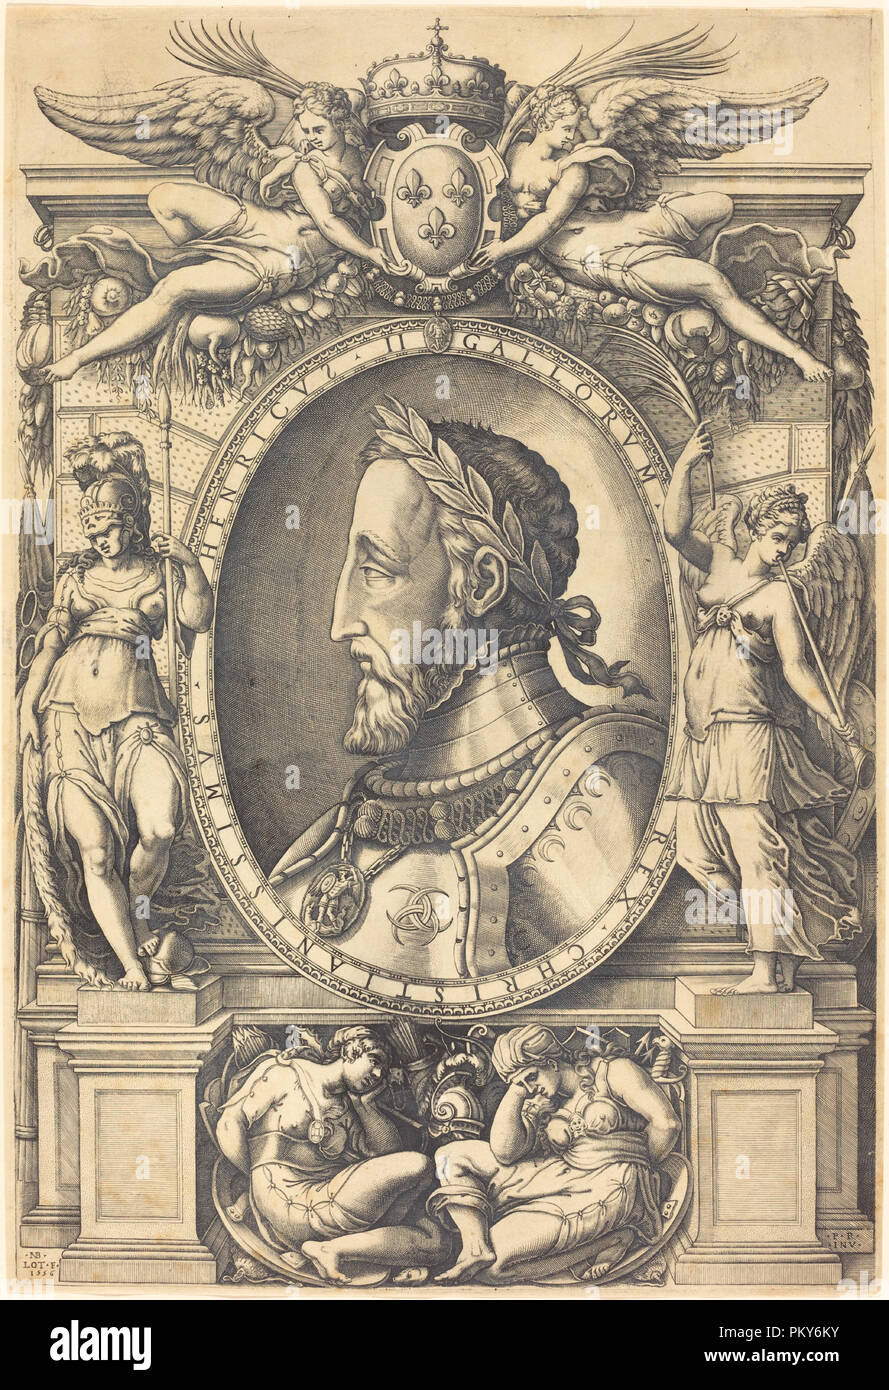 Henri II, King of France. Dated: 1556. Medium: engraving. Museum: National Gallery of Art, Washington DC. Author: Nicolaus Beatrizet. Nicolas Béatrizet. Stock Photo